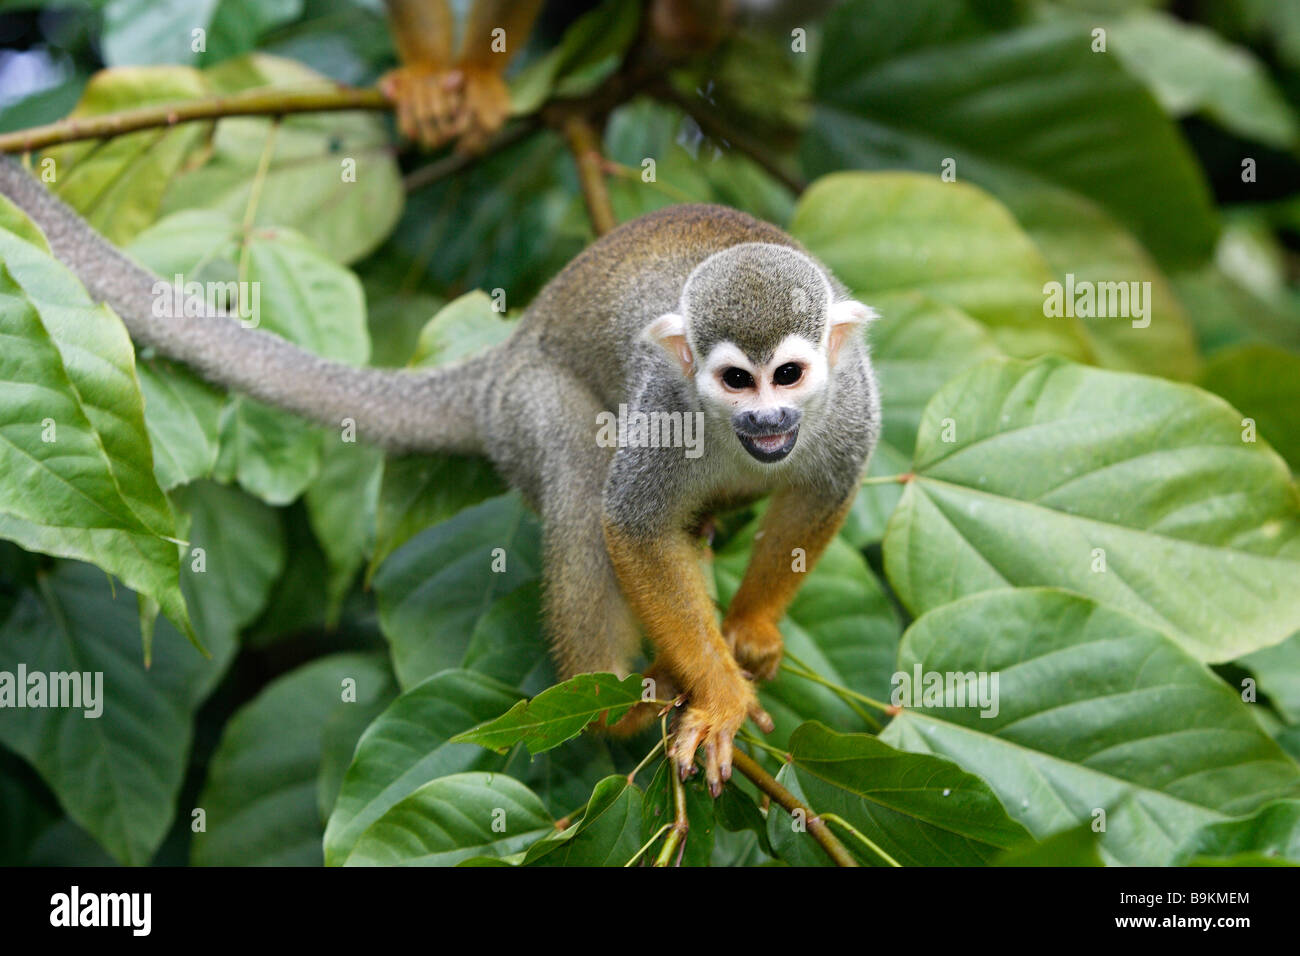 Common Squirrel Monkey (Saimiri sciureus) on a twig Stock Photo